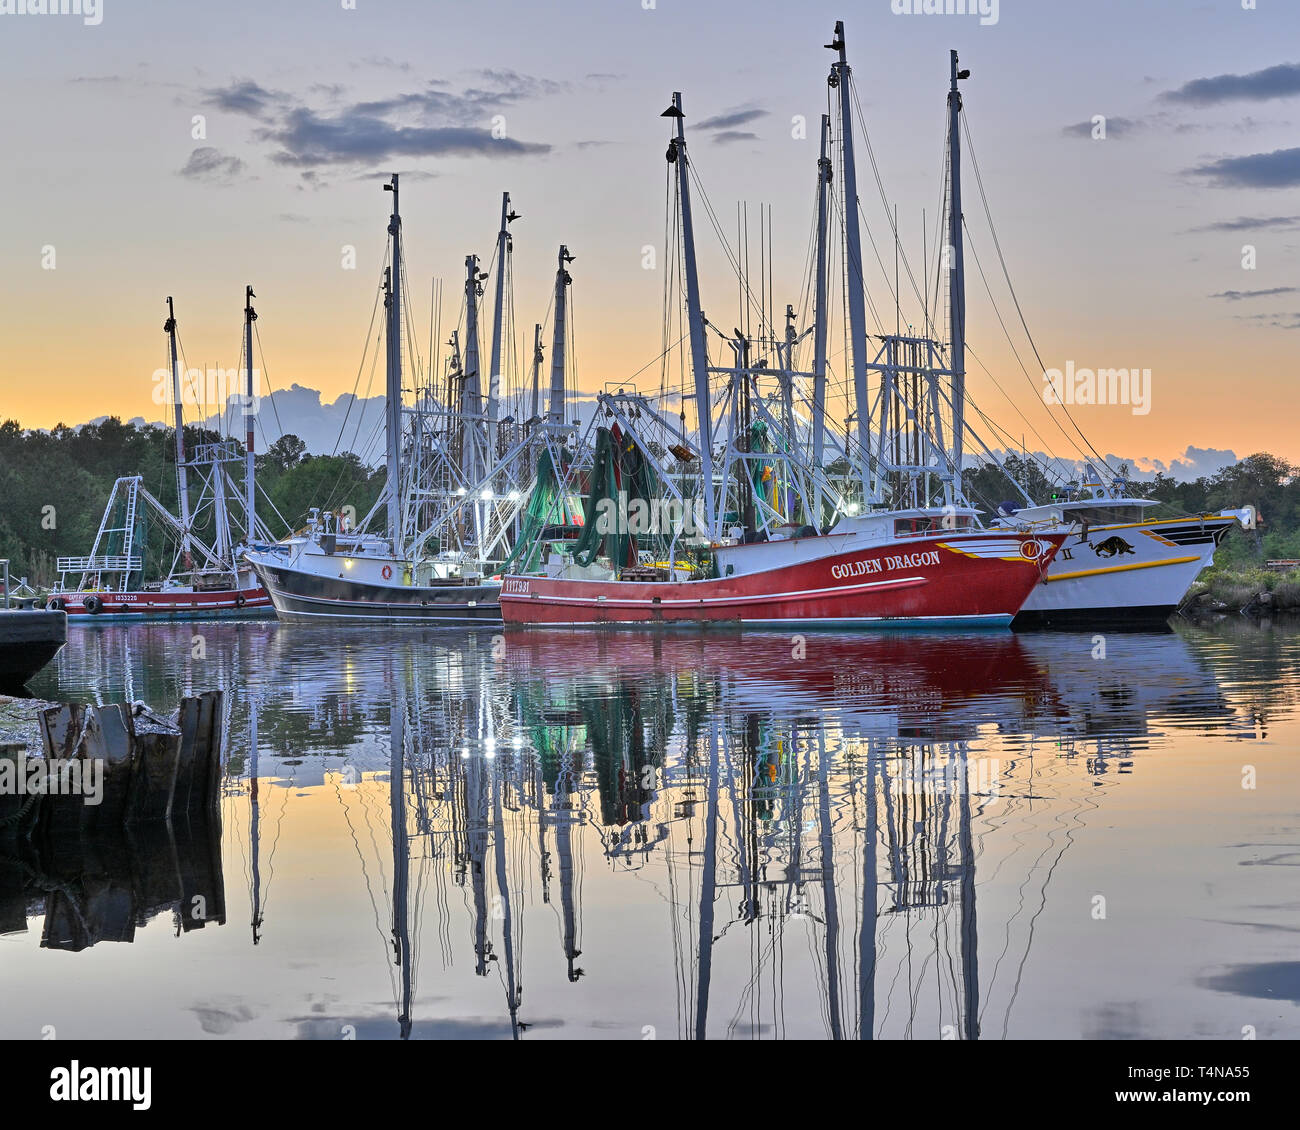 Commercial fishing boats and shrimp boats tied up at sunset in Bayou La Batre Alabama, USA. Stock Photo